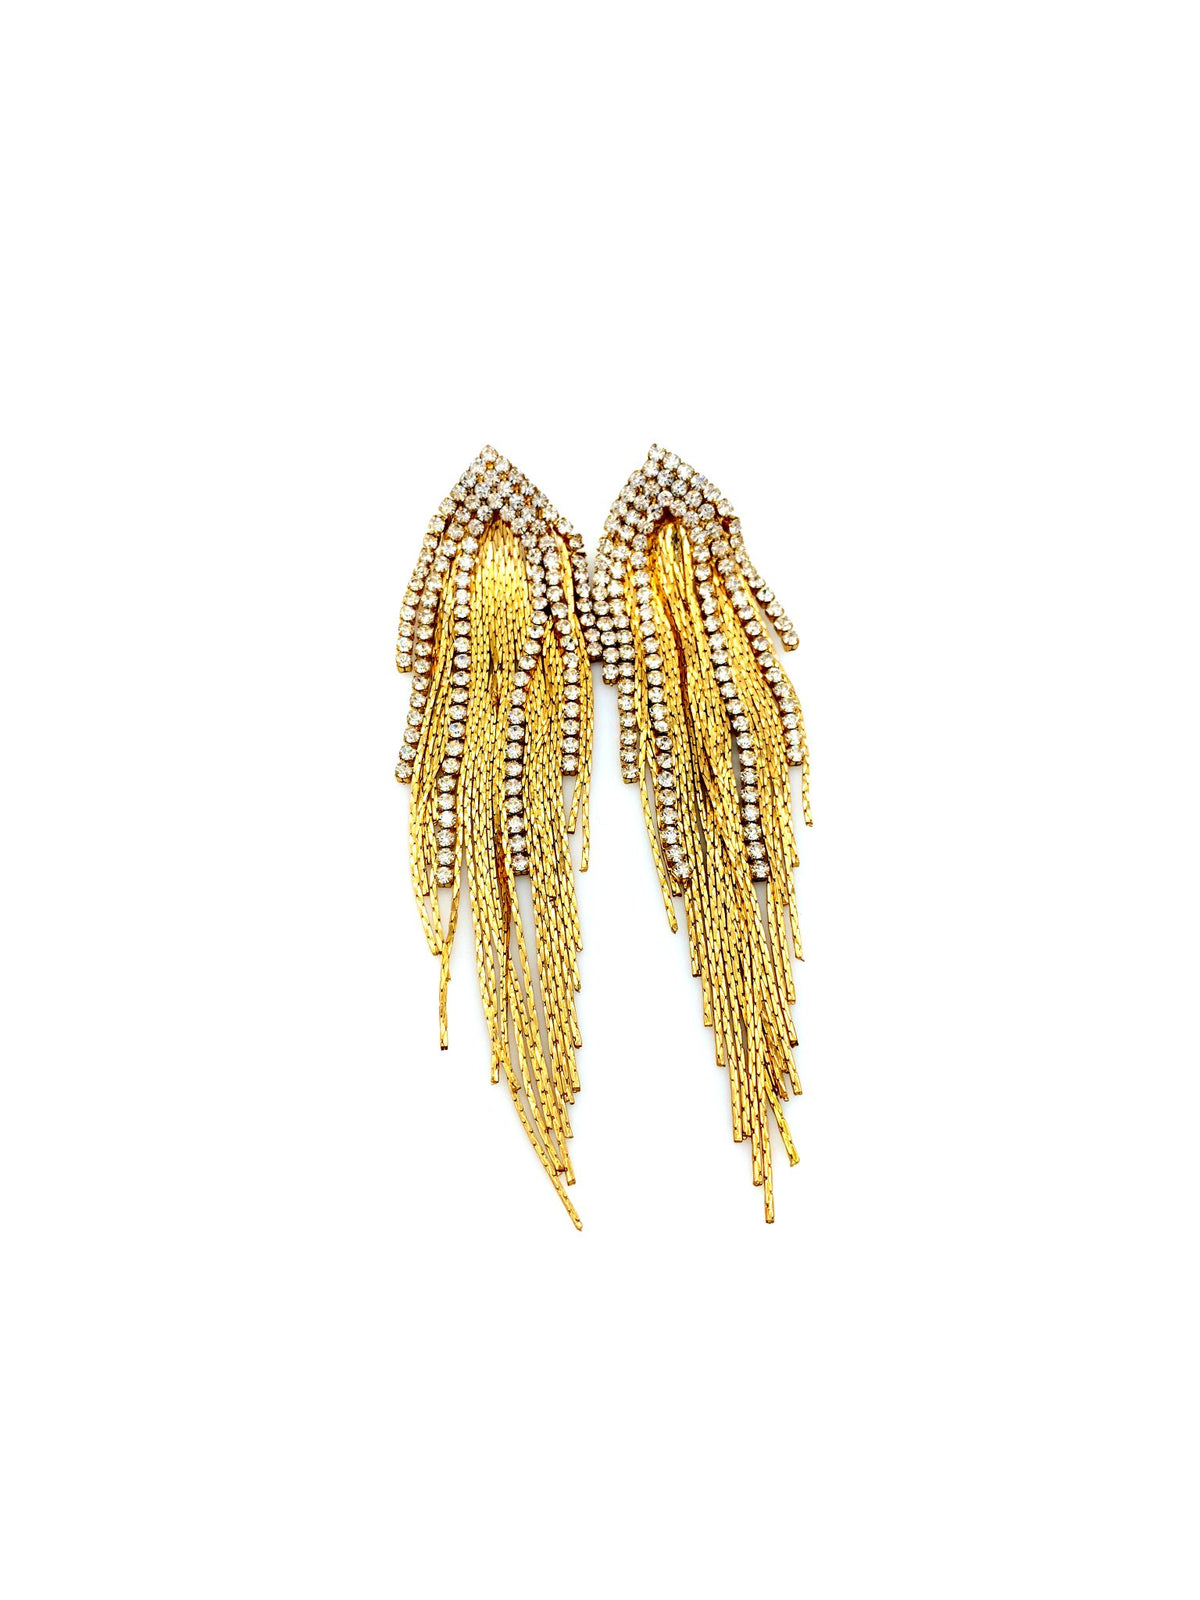 Vintage Gold Long Chain & Rhinestone Fringe Pierced Earrings - 24 Wishes Vintage Jewelry